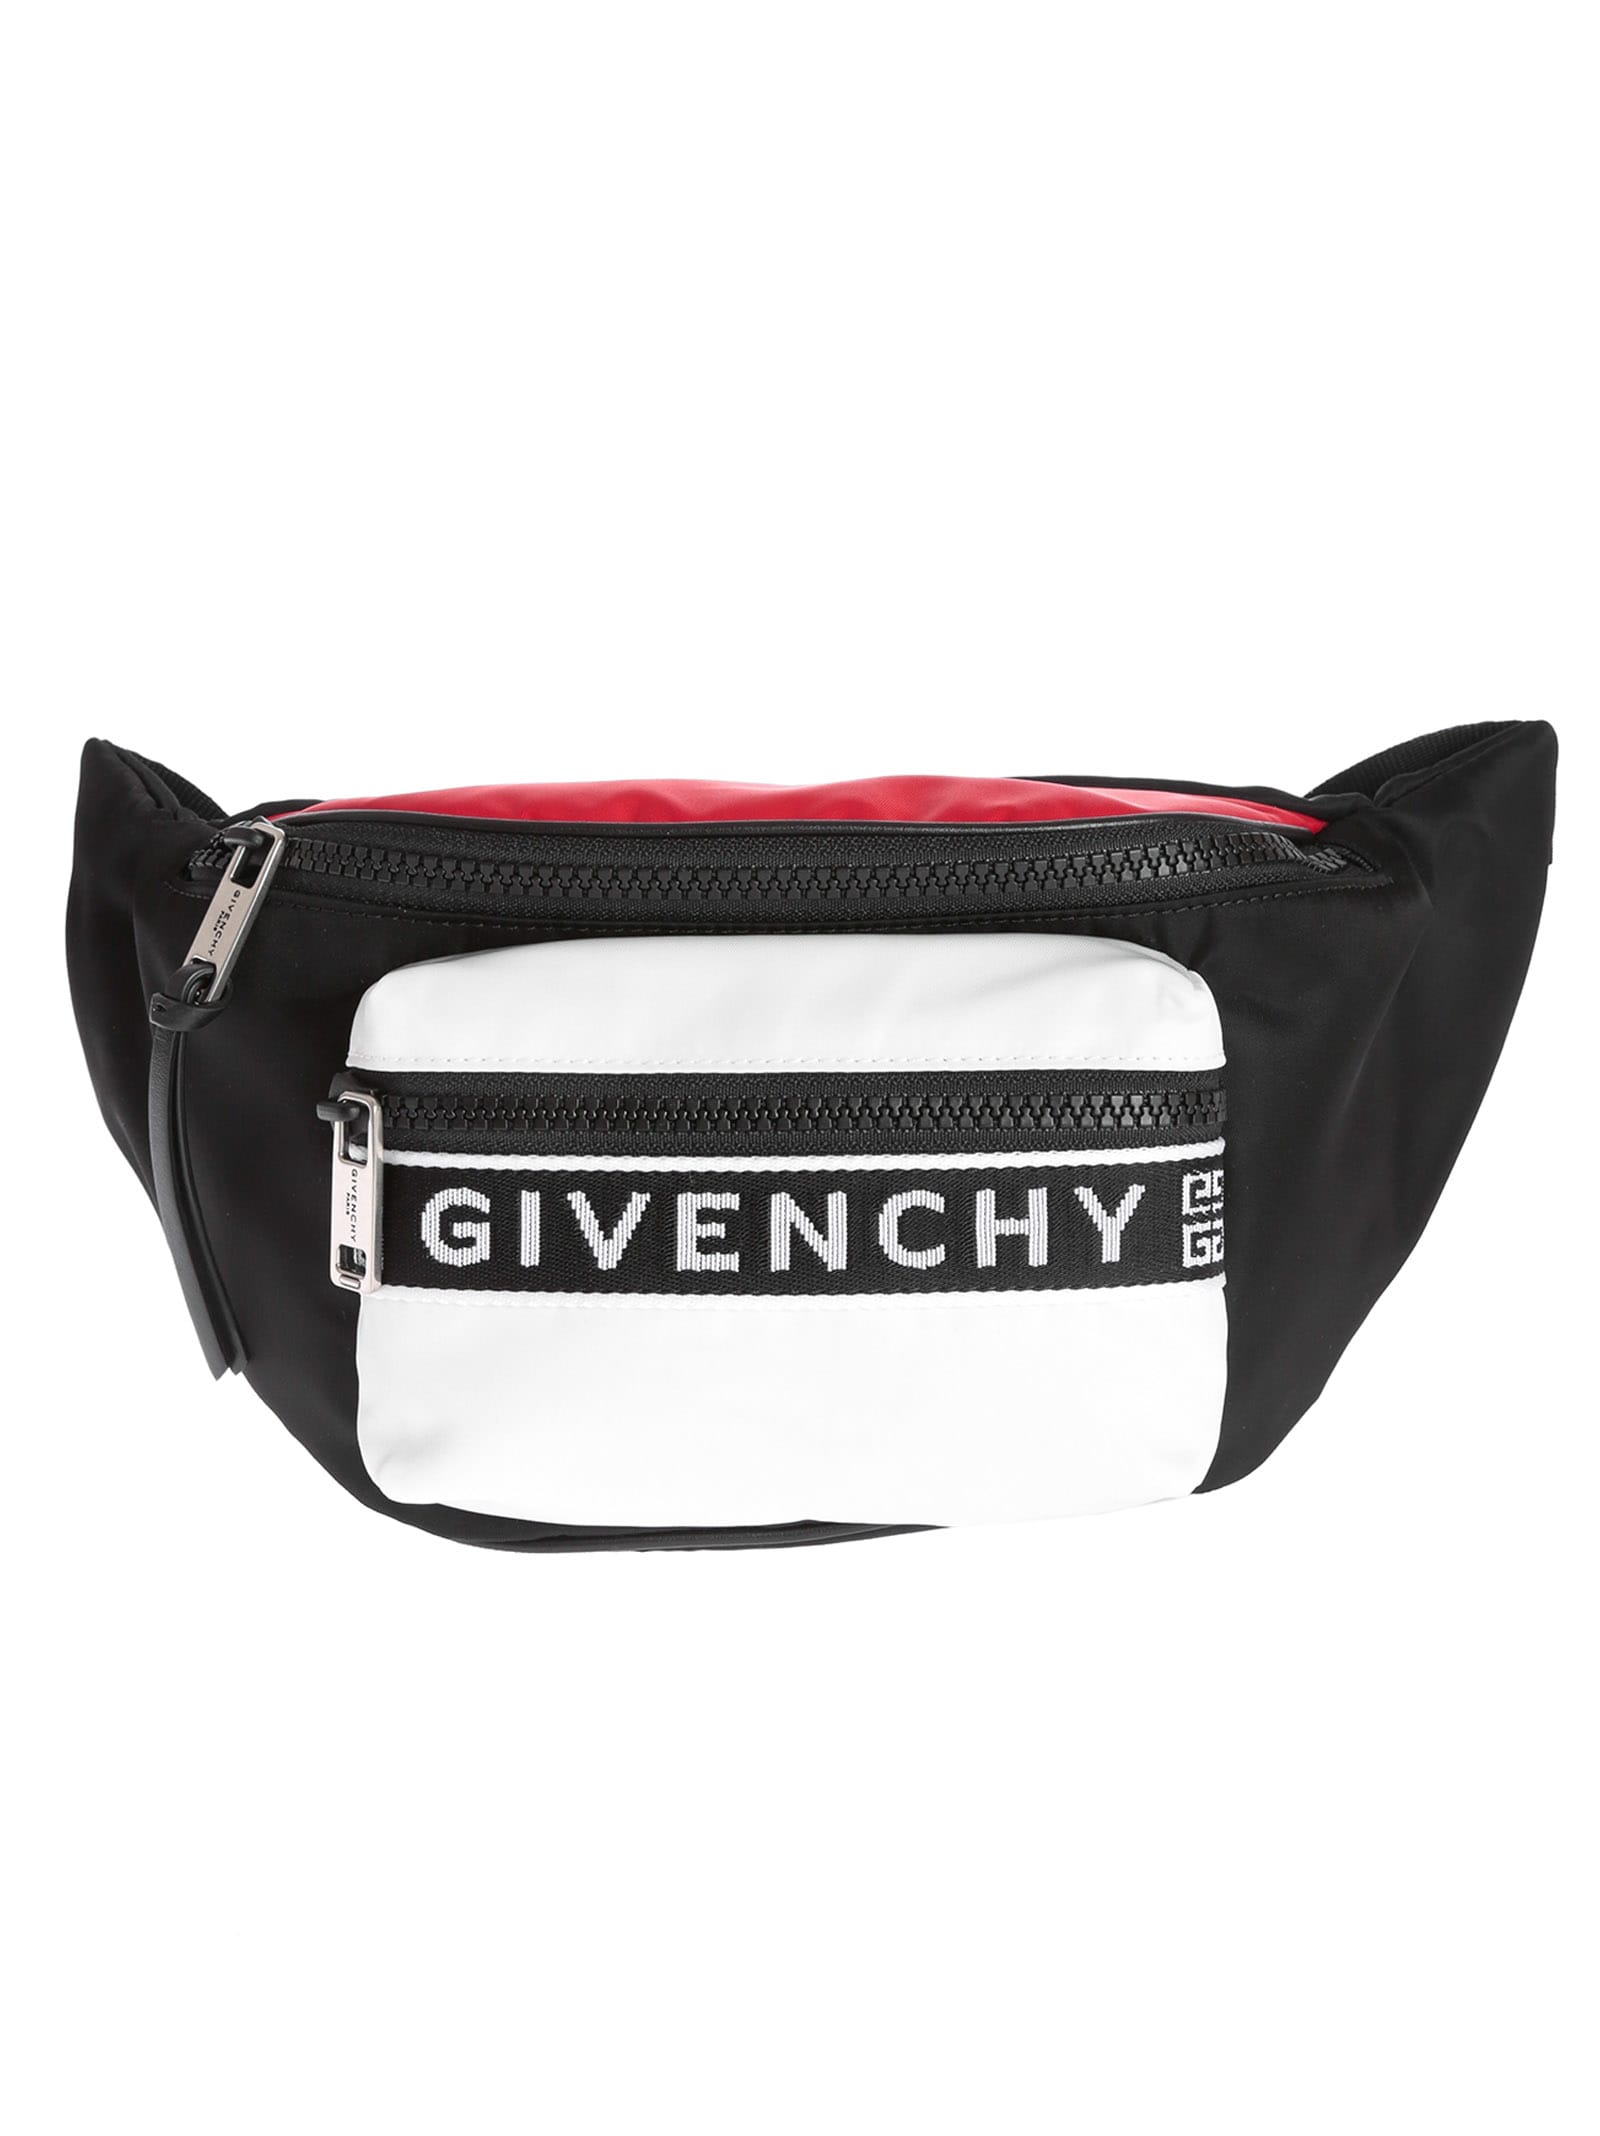 Givenchy Givenchy Light 3 Sac Banane Belt Bag - 11001550 | italist